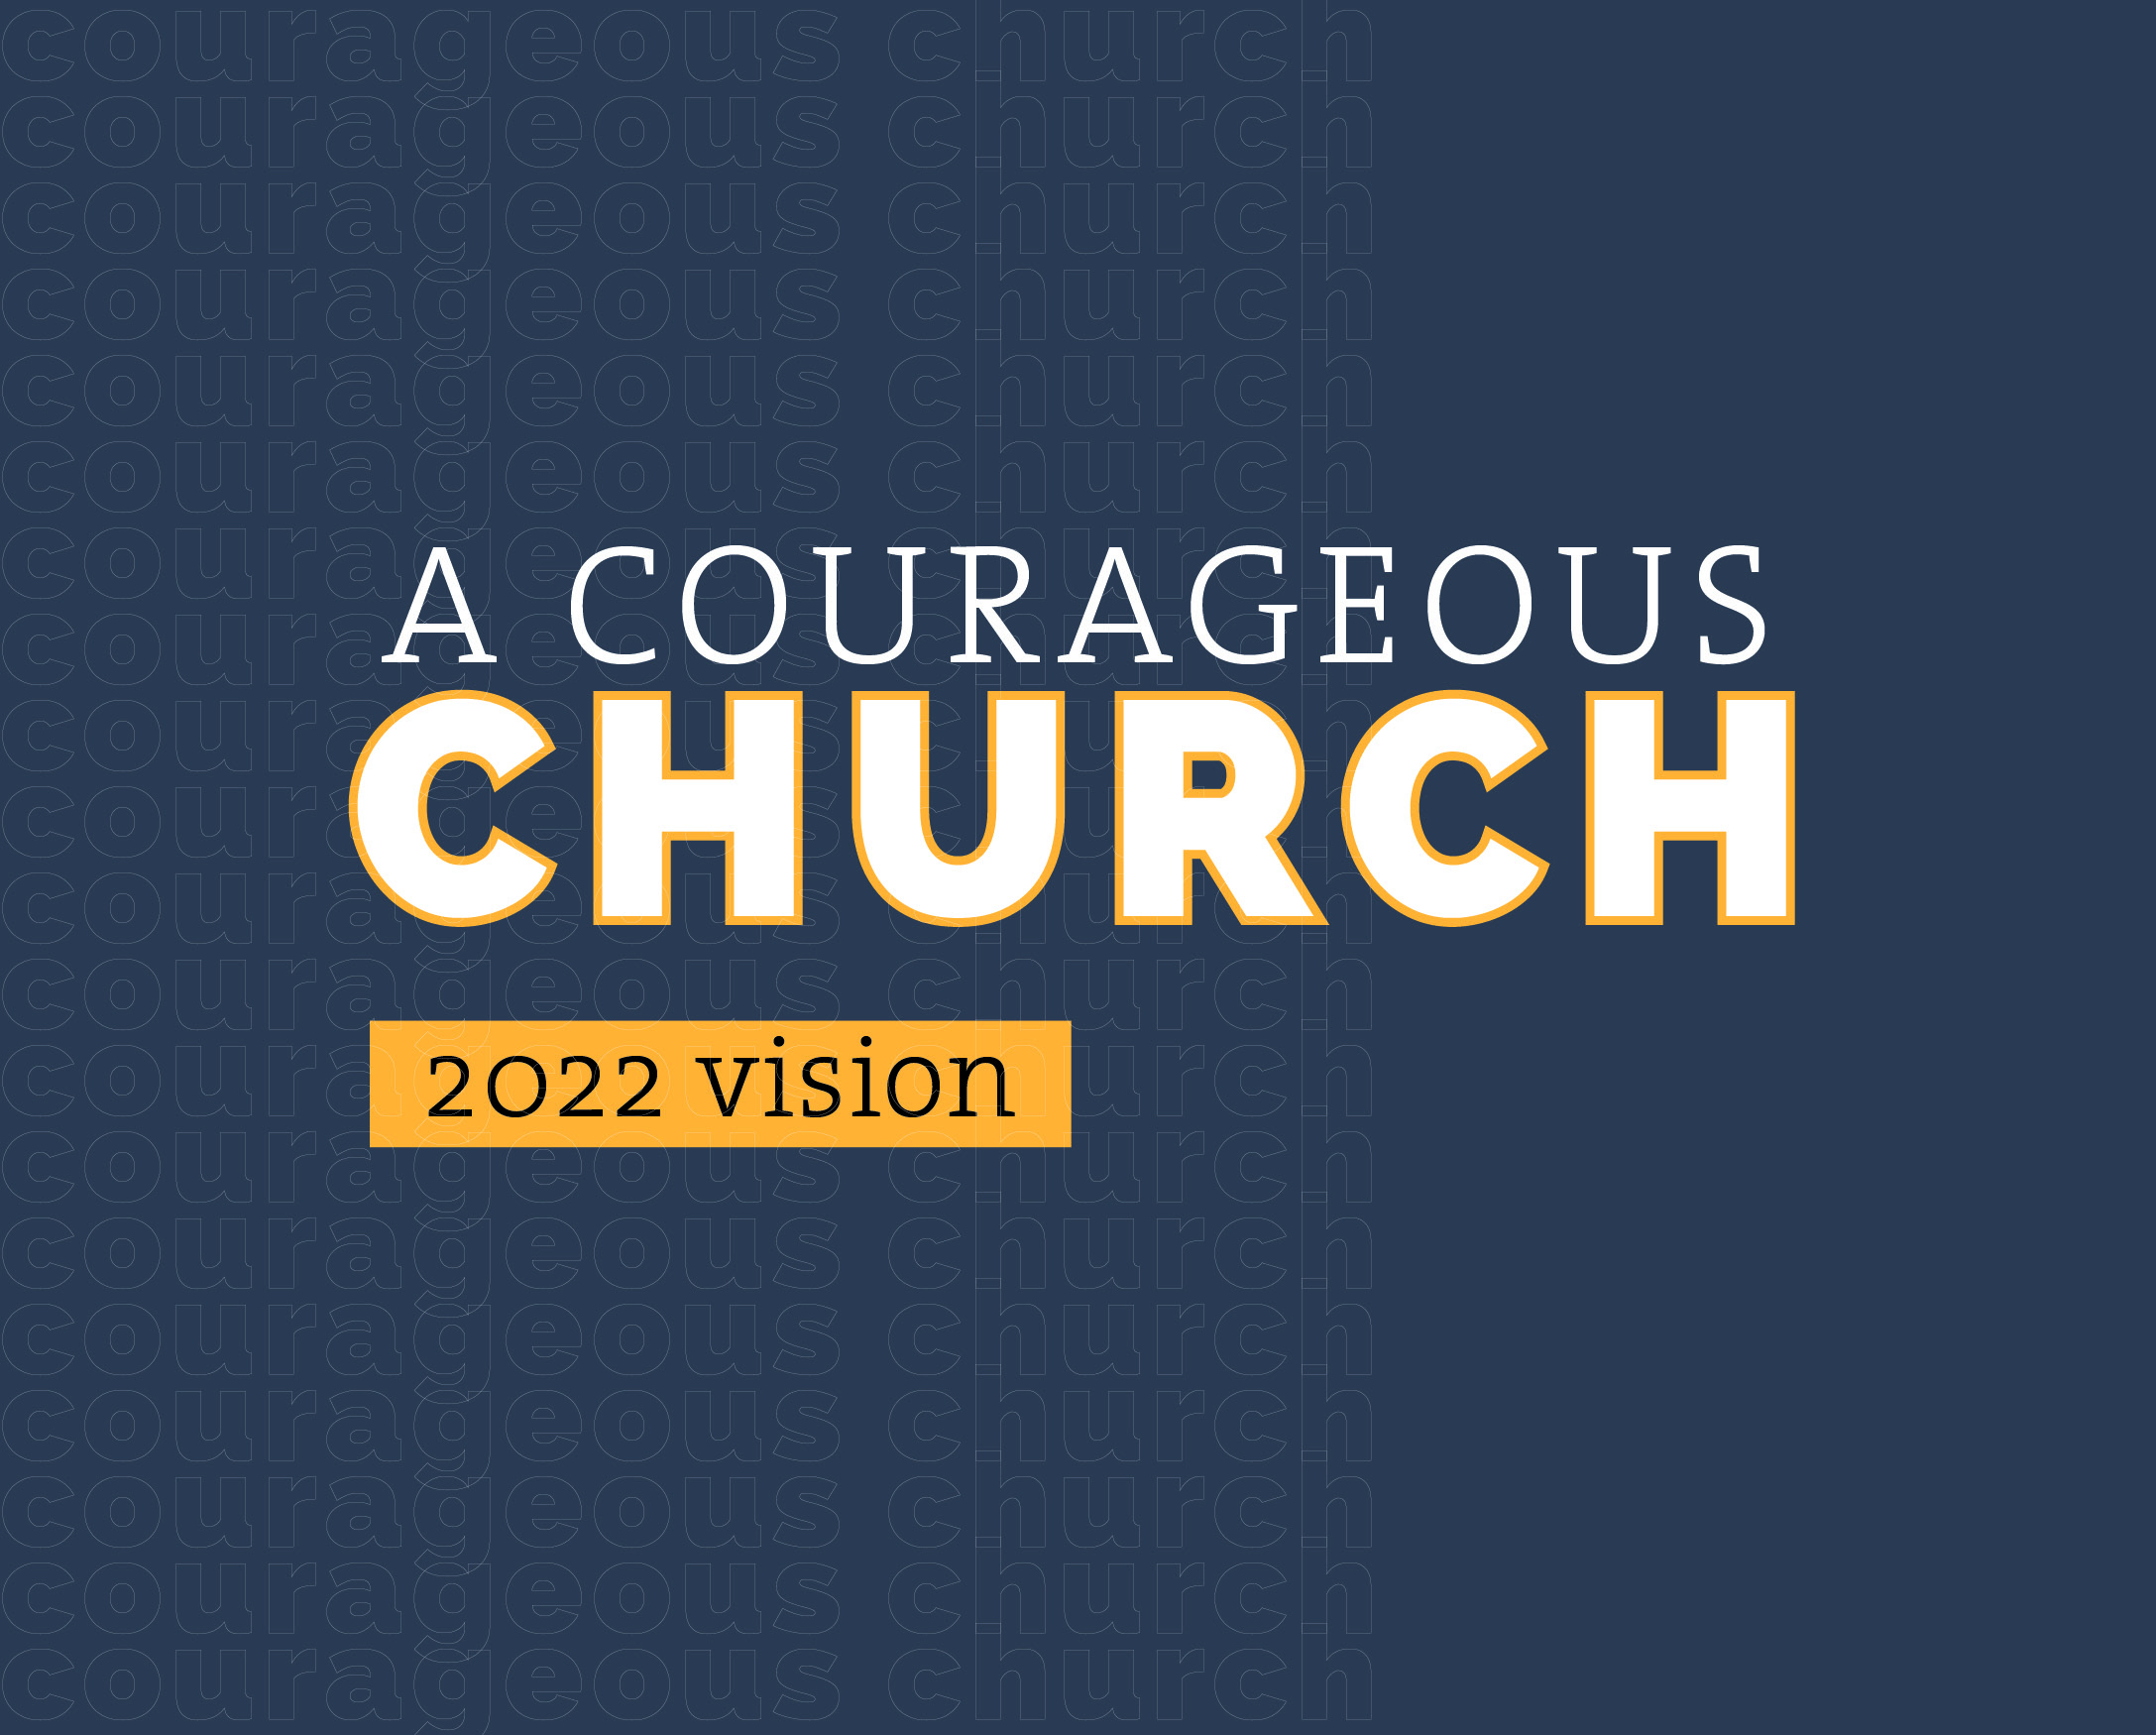 A Courageous Church: In